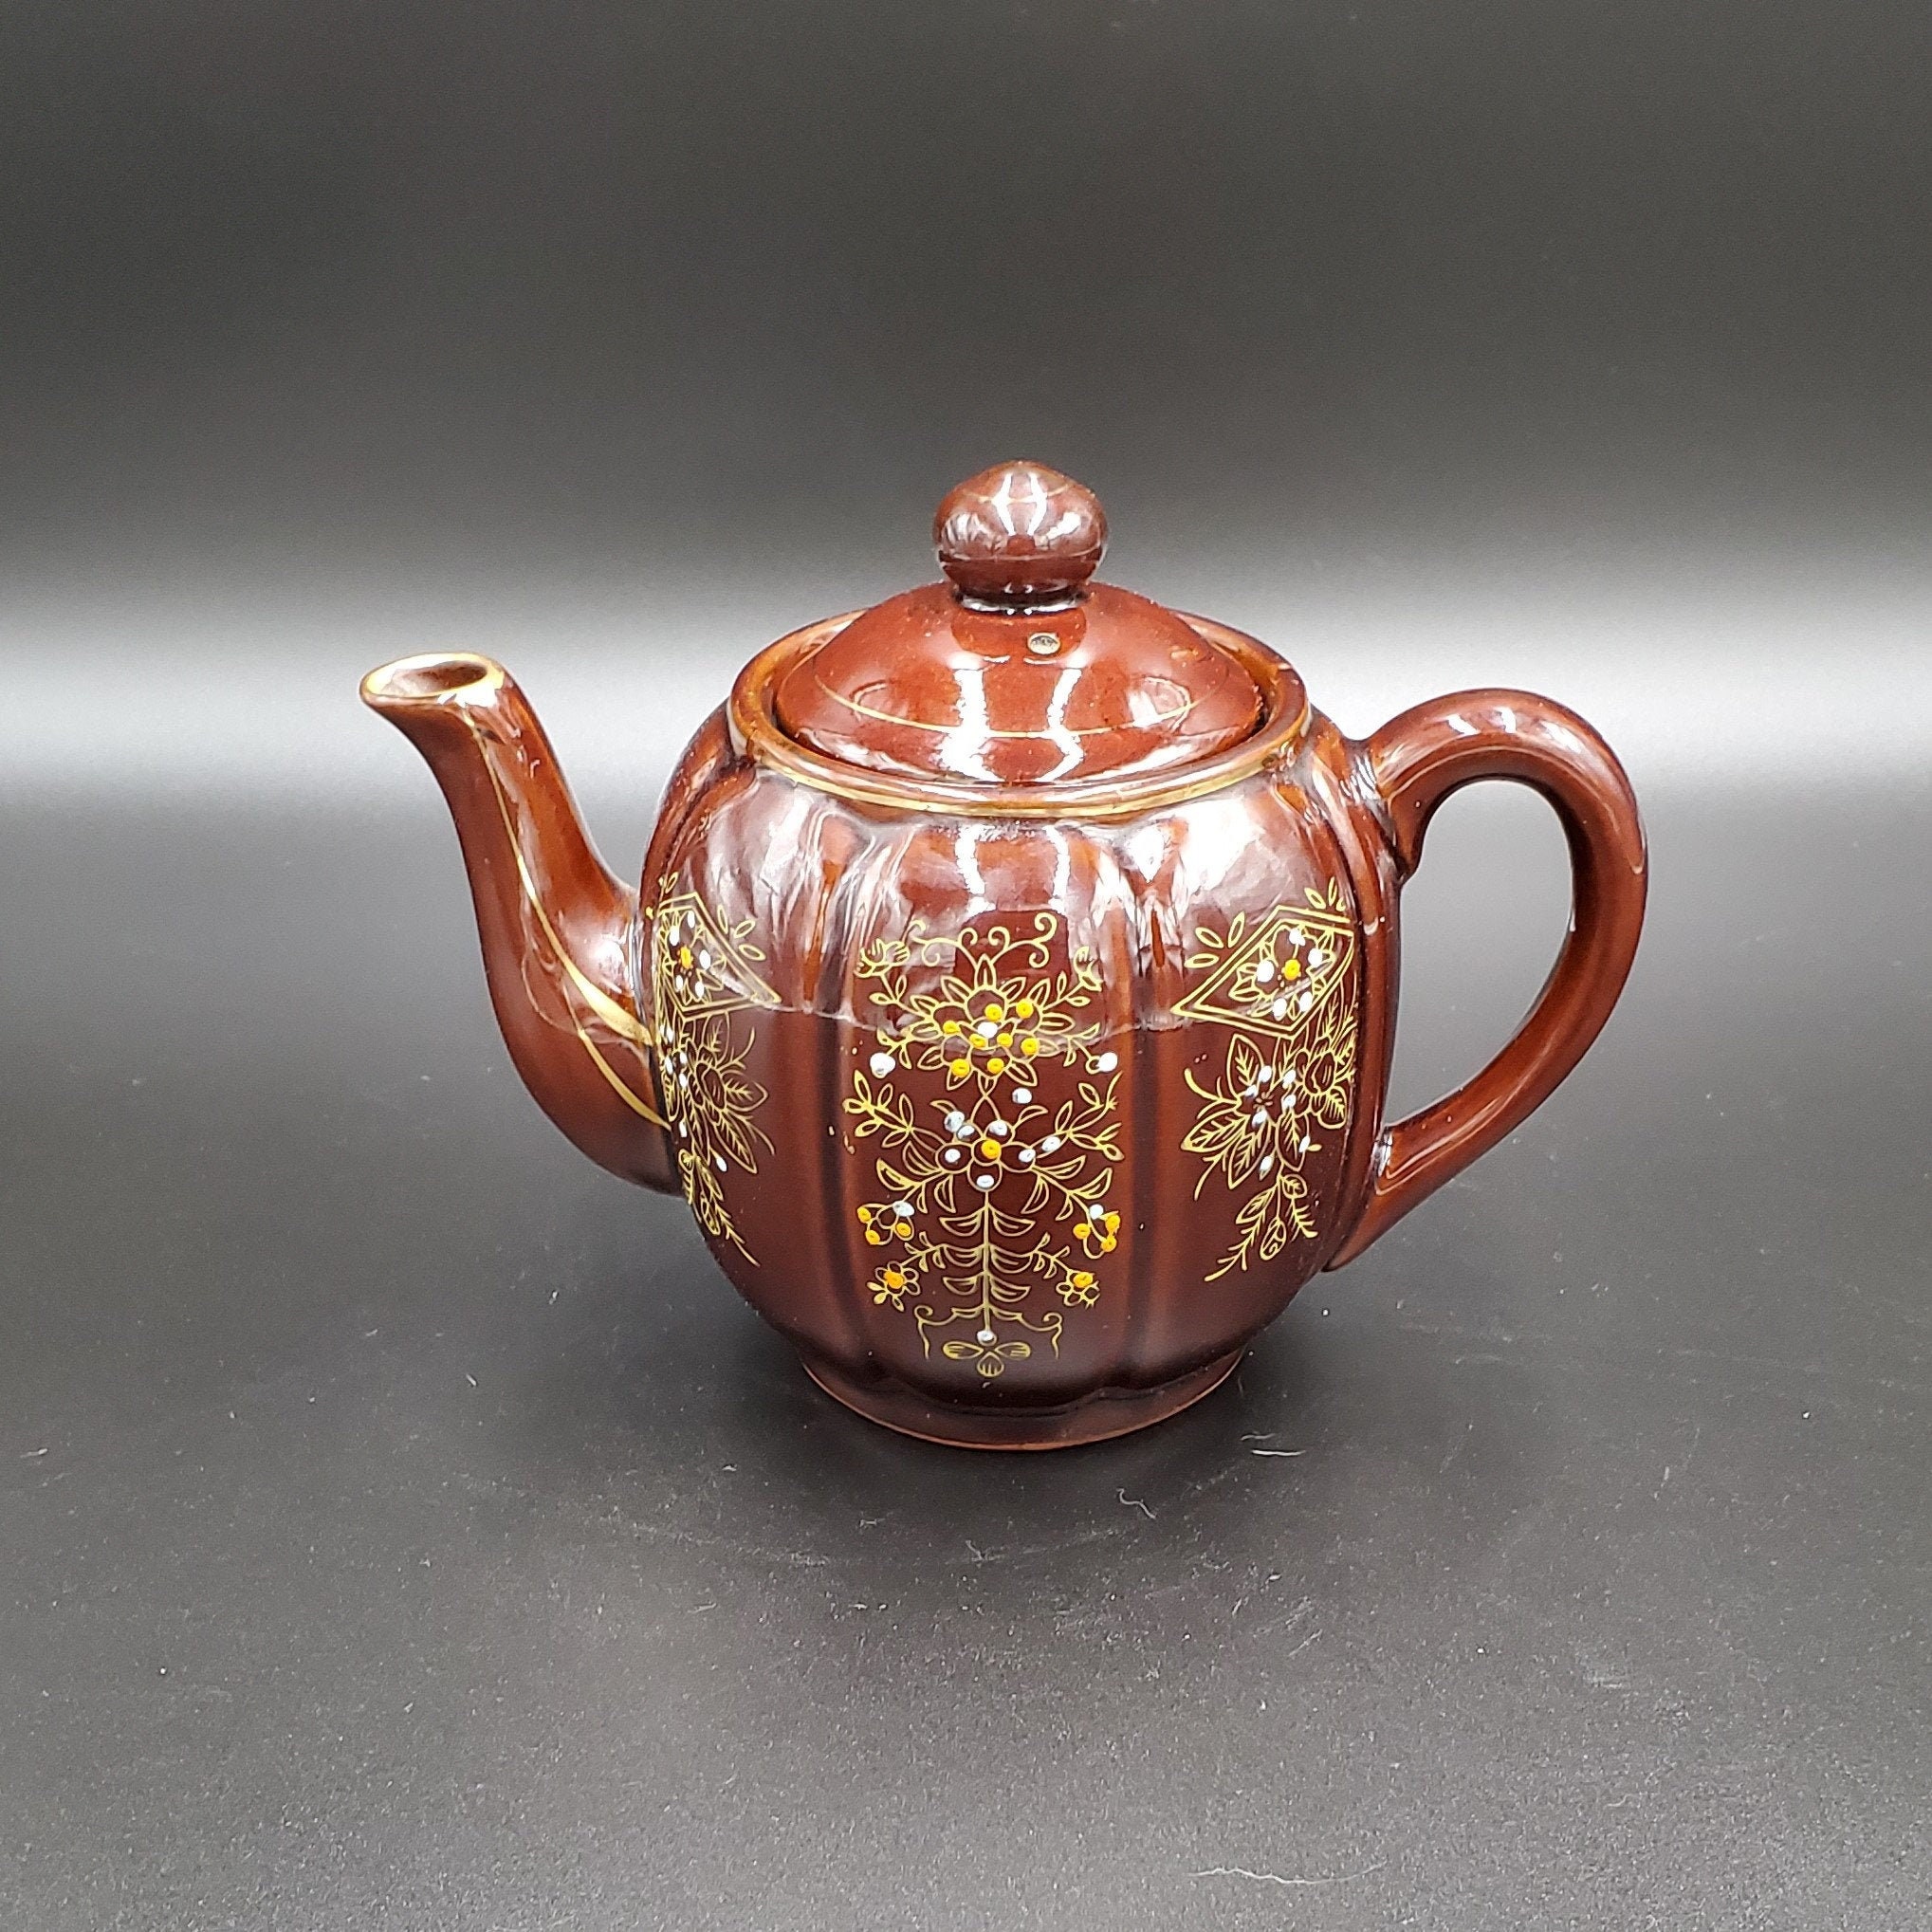 Brown teapot made in japan